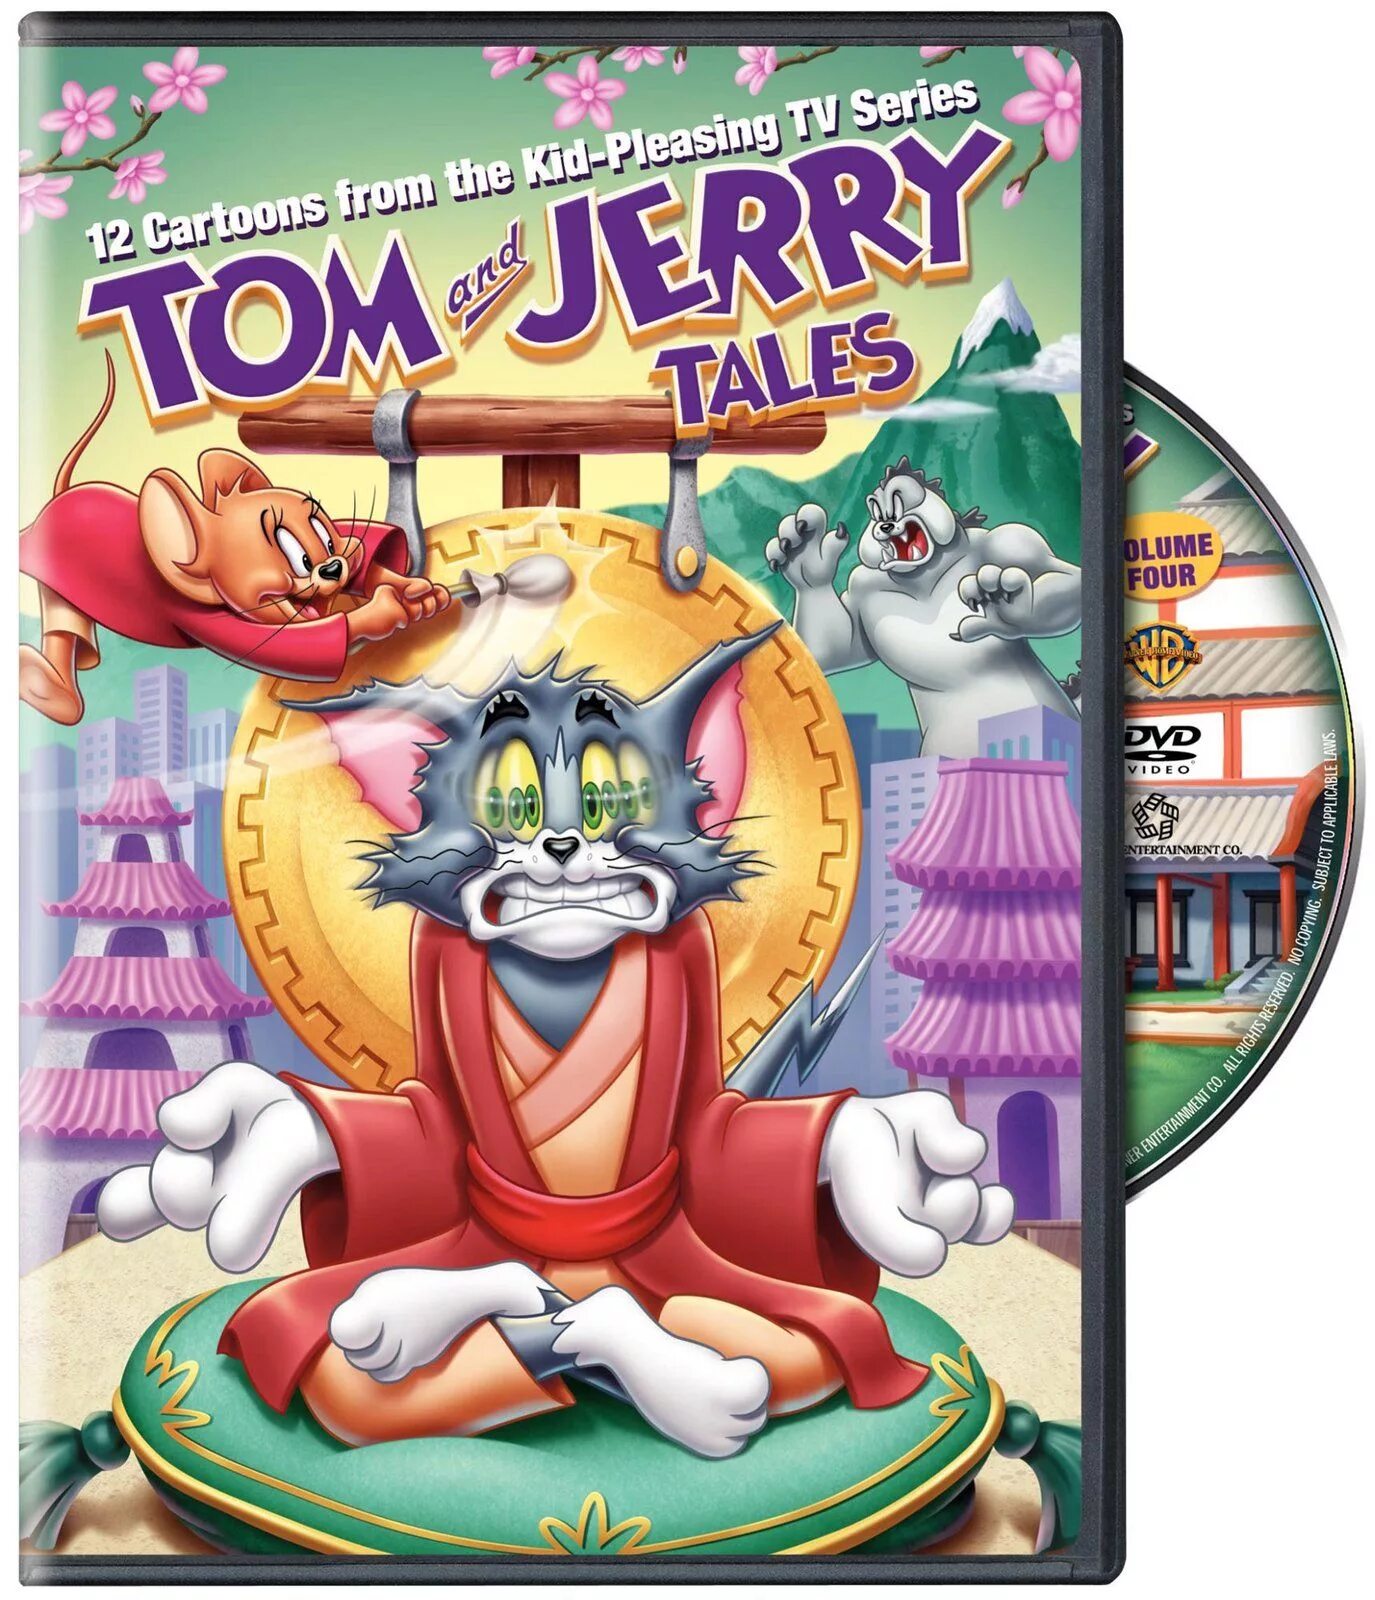 Toms tales. Том и Джерри сказки DVD. DVD том и Джерри 4. Приключения Тома и Джерри 2008. Том и Джерри двд том 2.